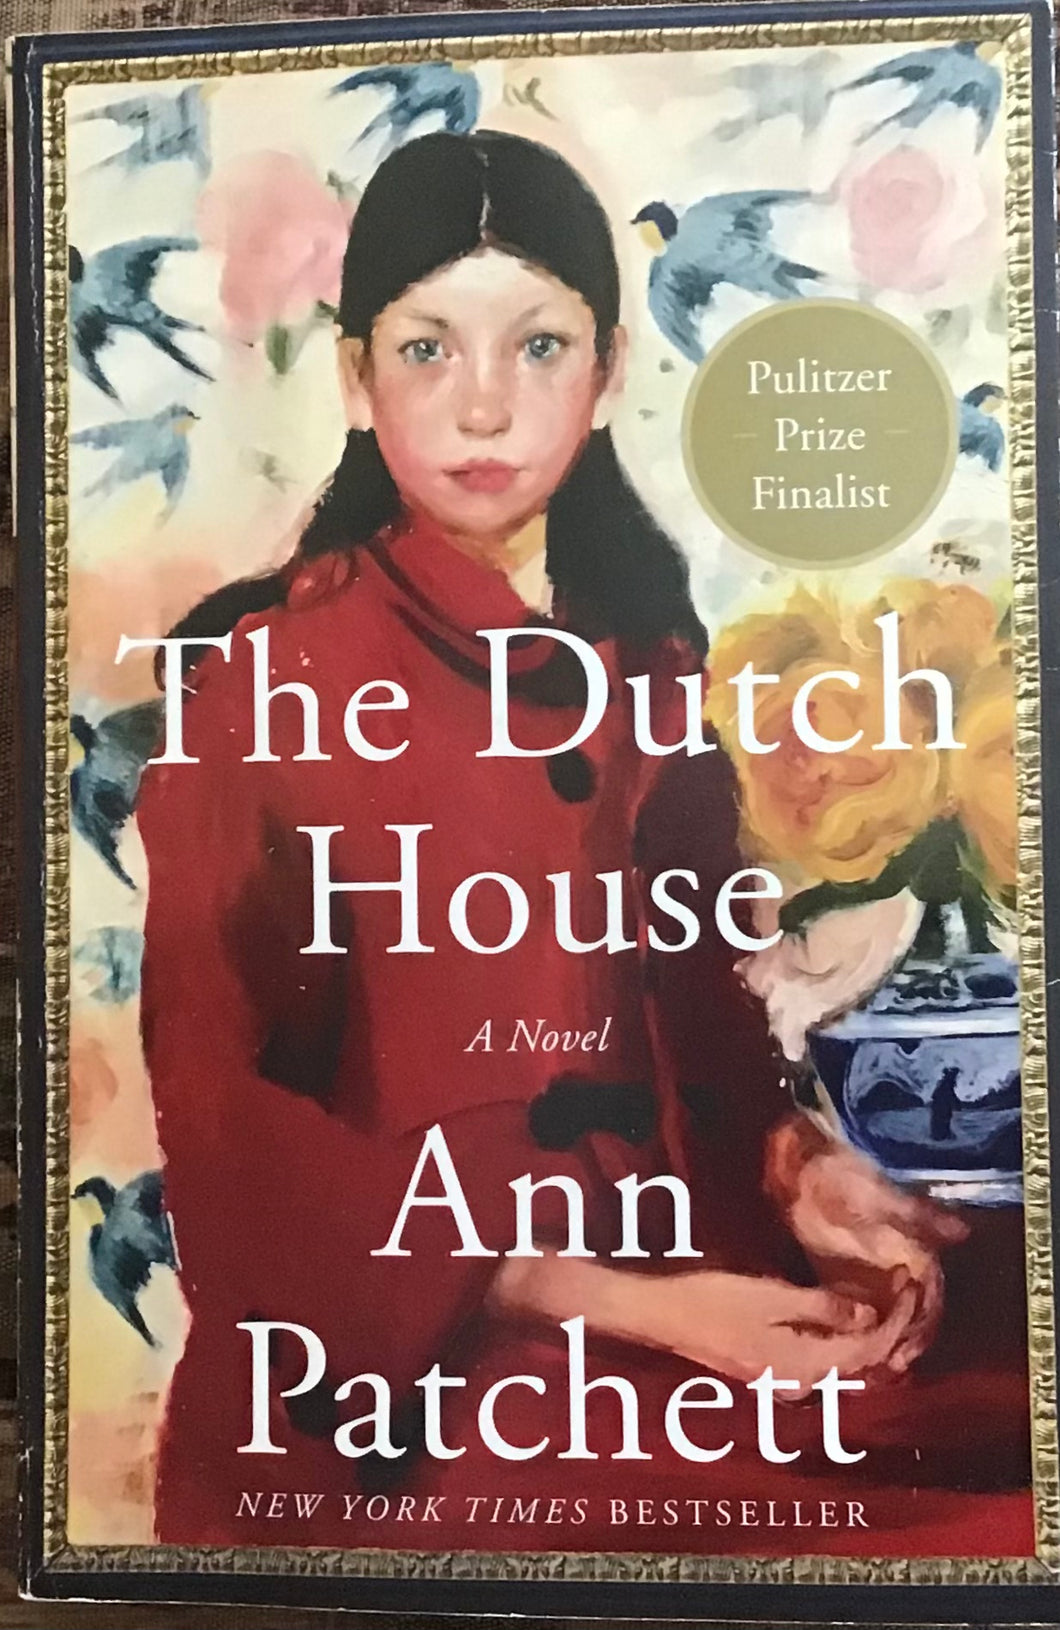 The Dutch House, Ann Pratchett